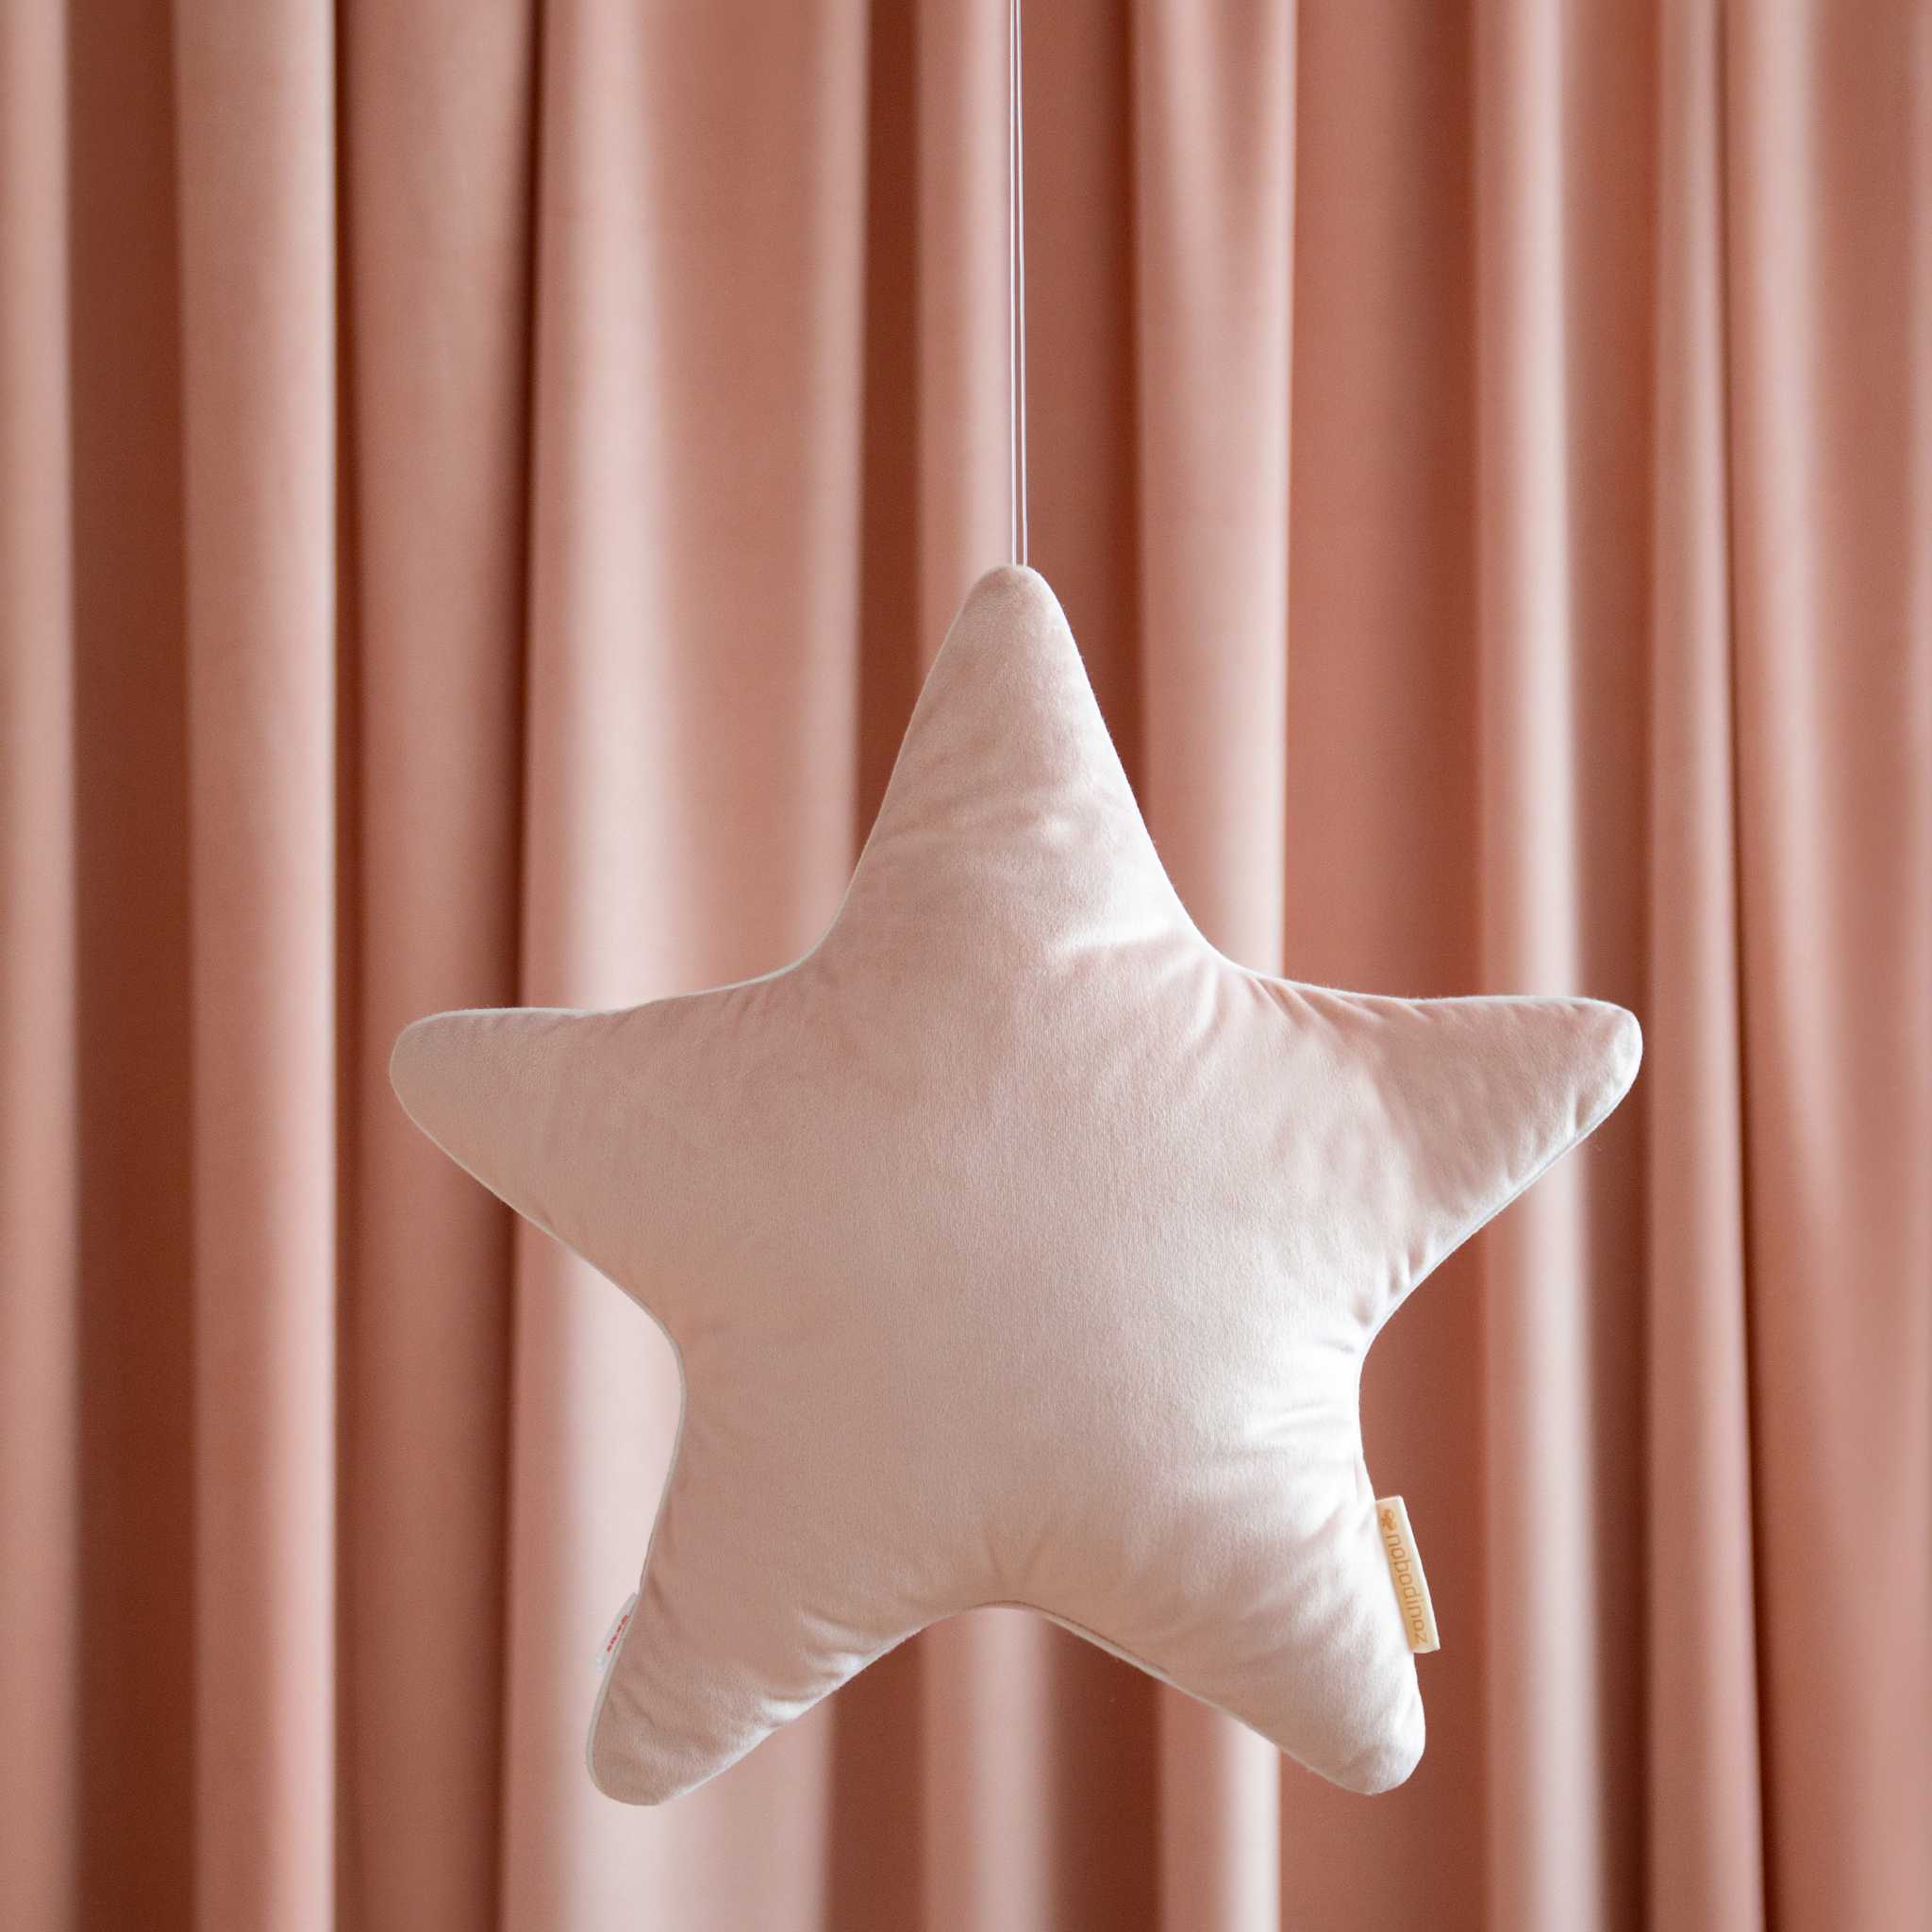 Nobodinoz Velvet Star Cushion in Bloom Pink